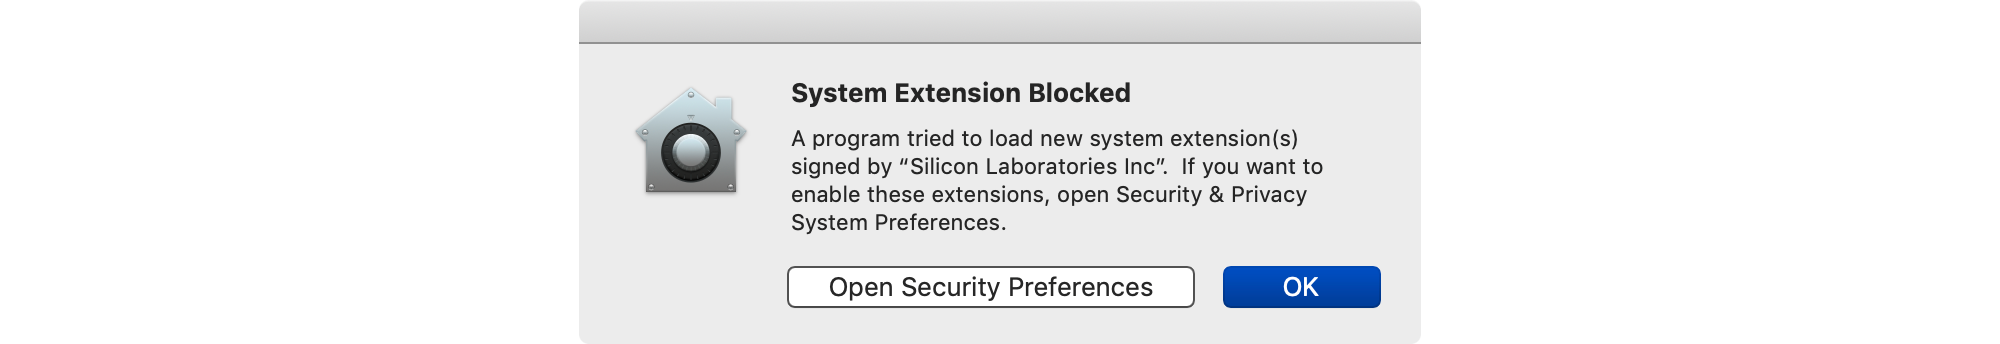 System_Extension_Blocked_v2.png